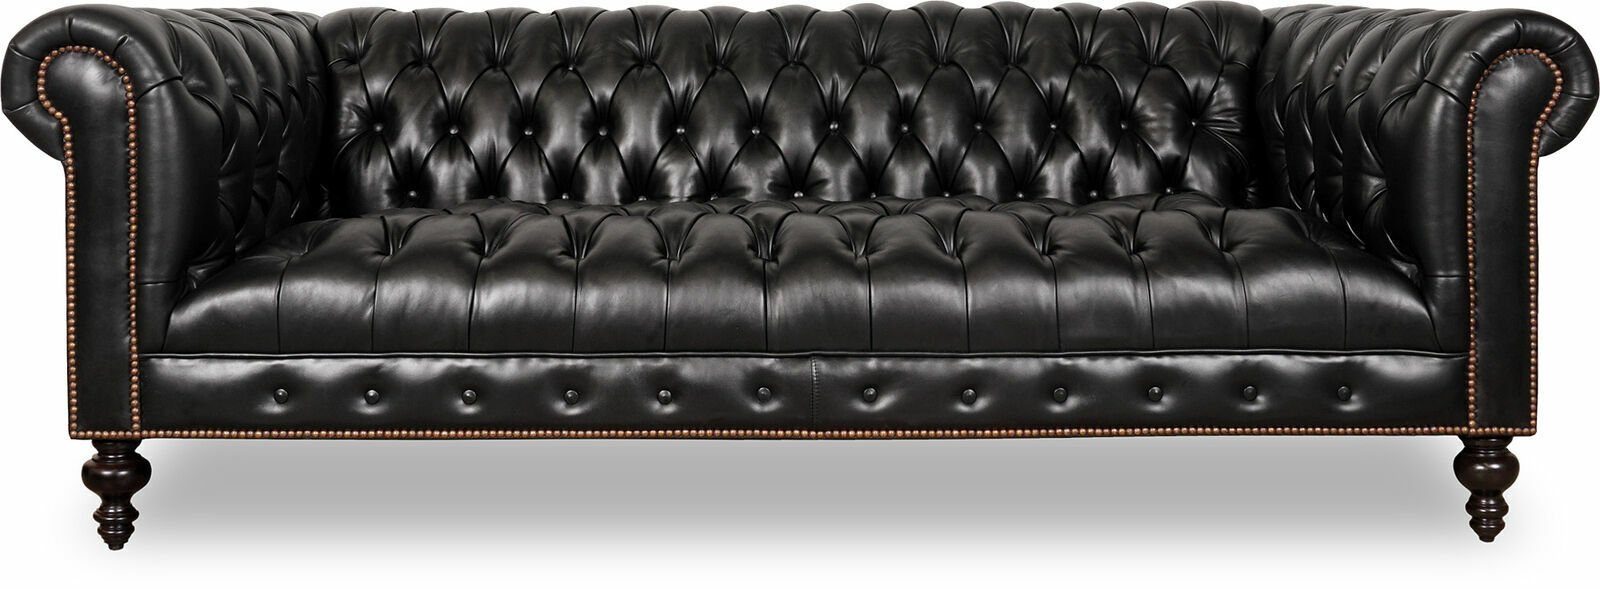 Leder Chesterfield-Sofa Schwarz 1 Europa Couch Made England Leder 100% JVmoebel Sofort, Chesterfield Sofa Teile, in